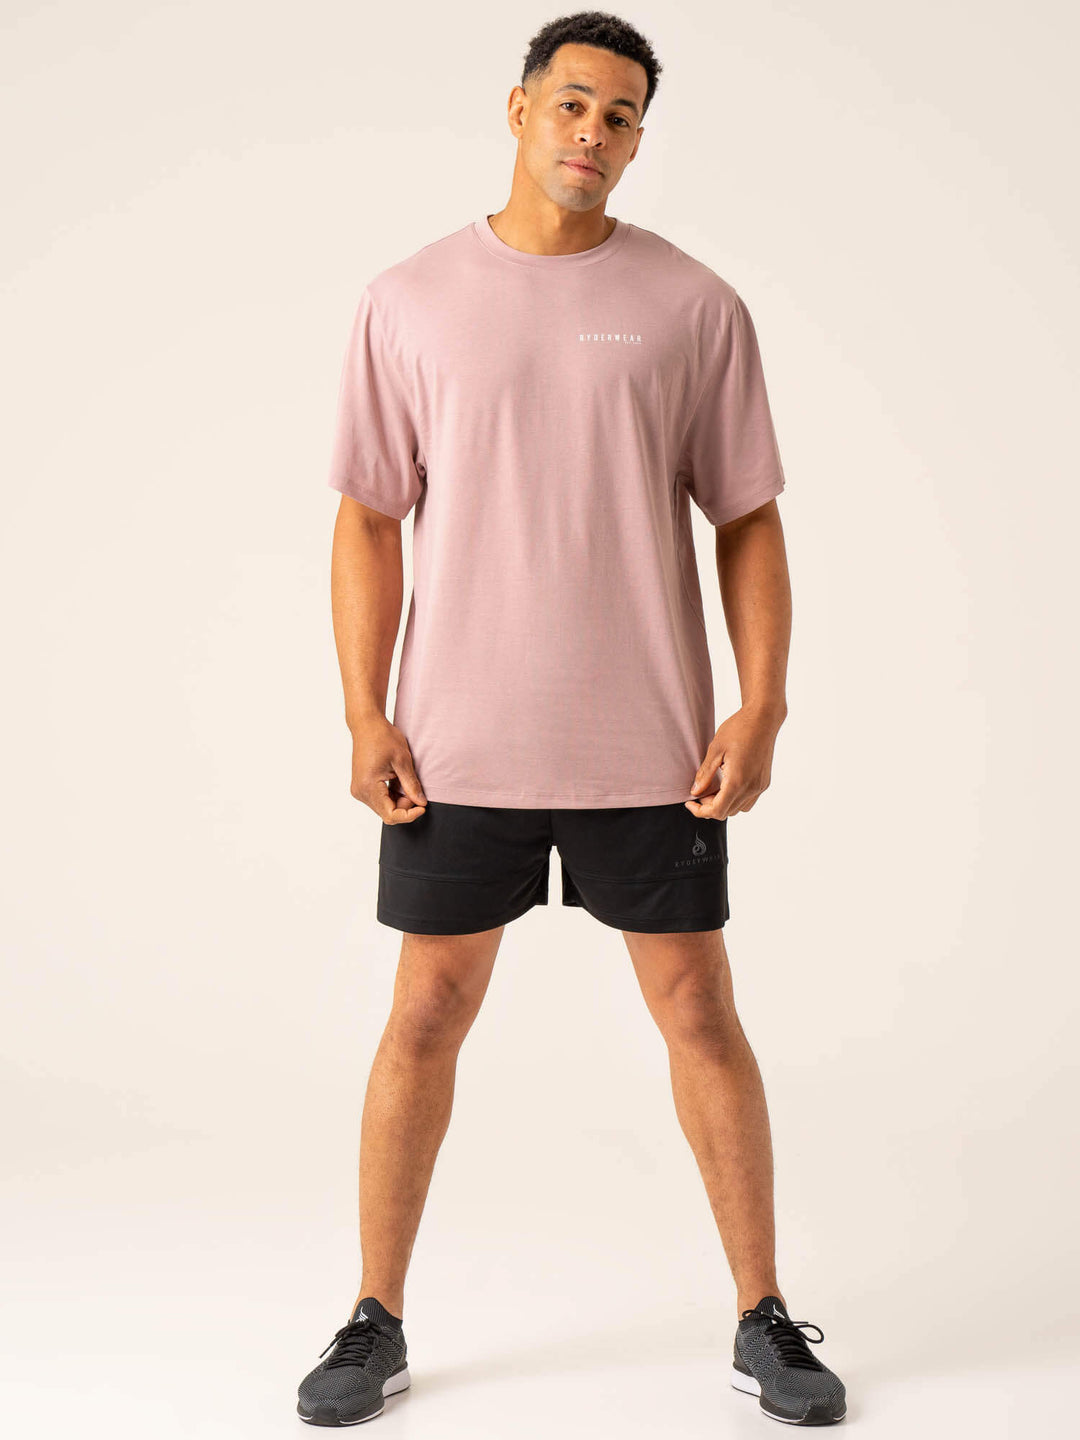 Advance Oversized T-Shirt - Cinder Clothing Ryderwear 